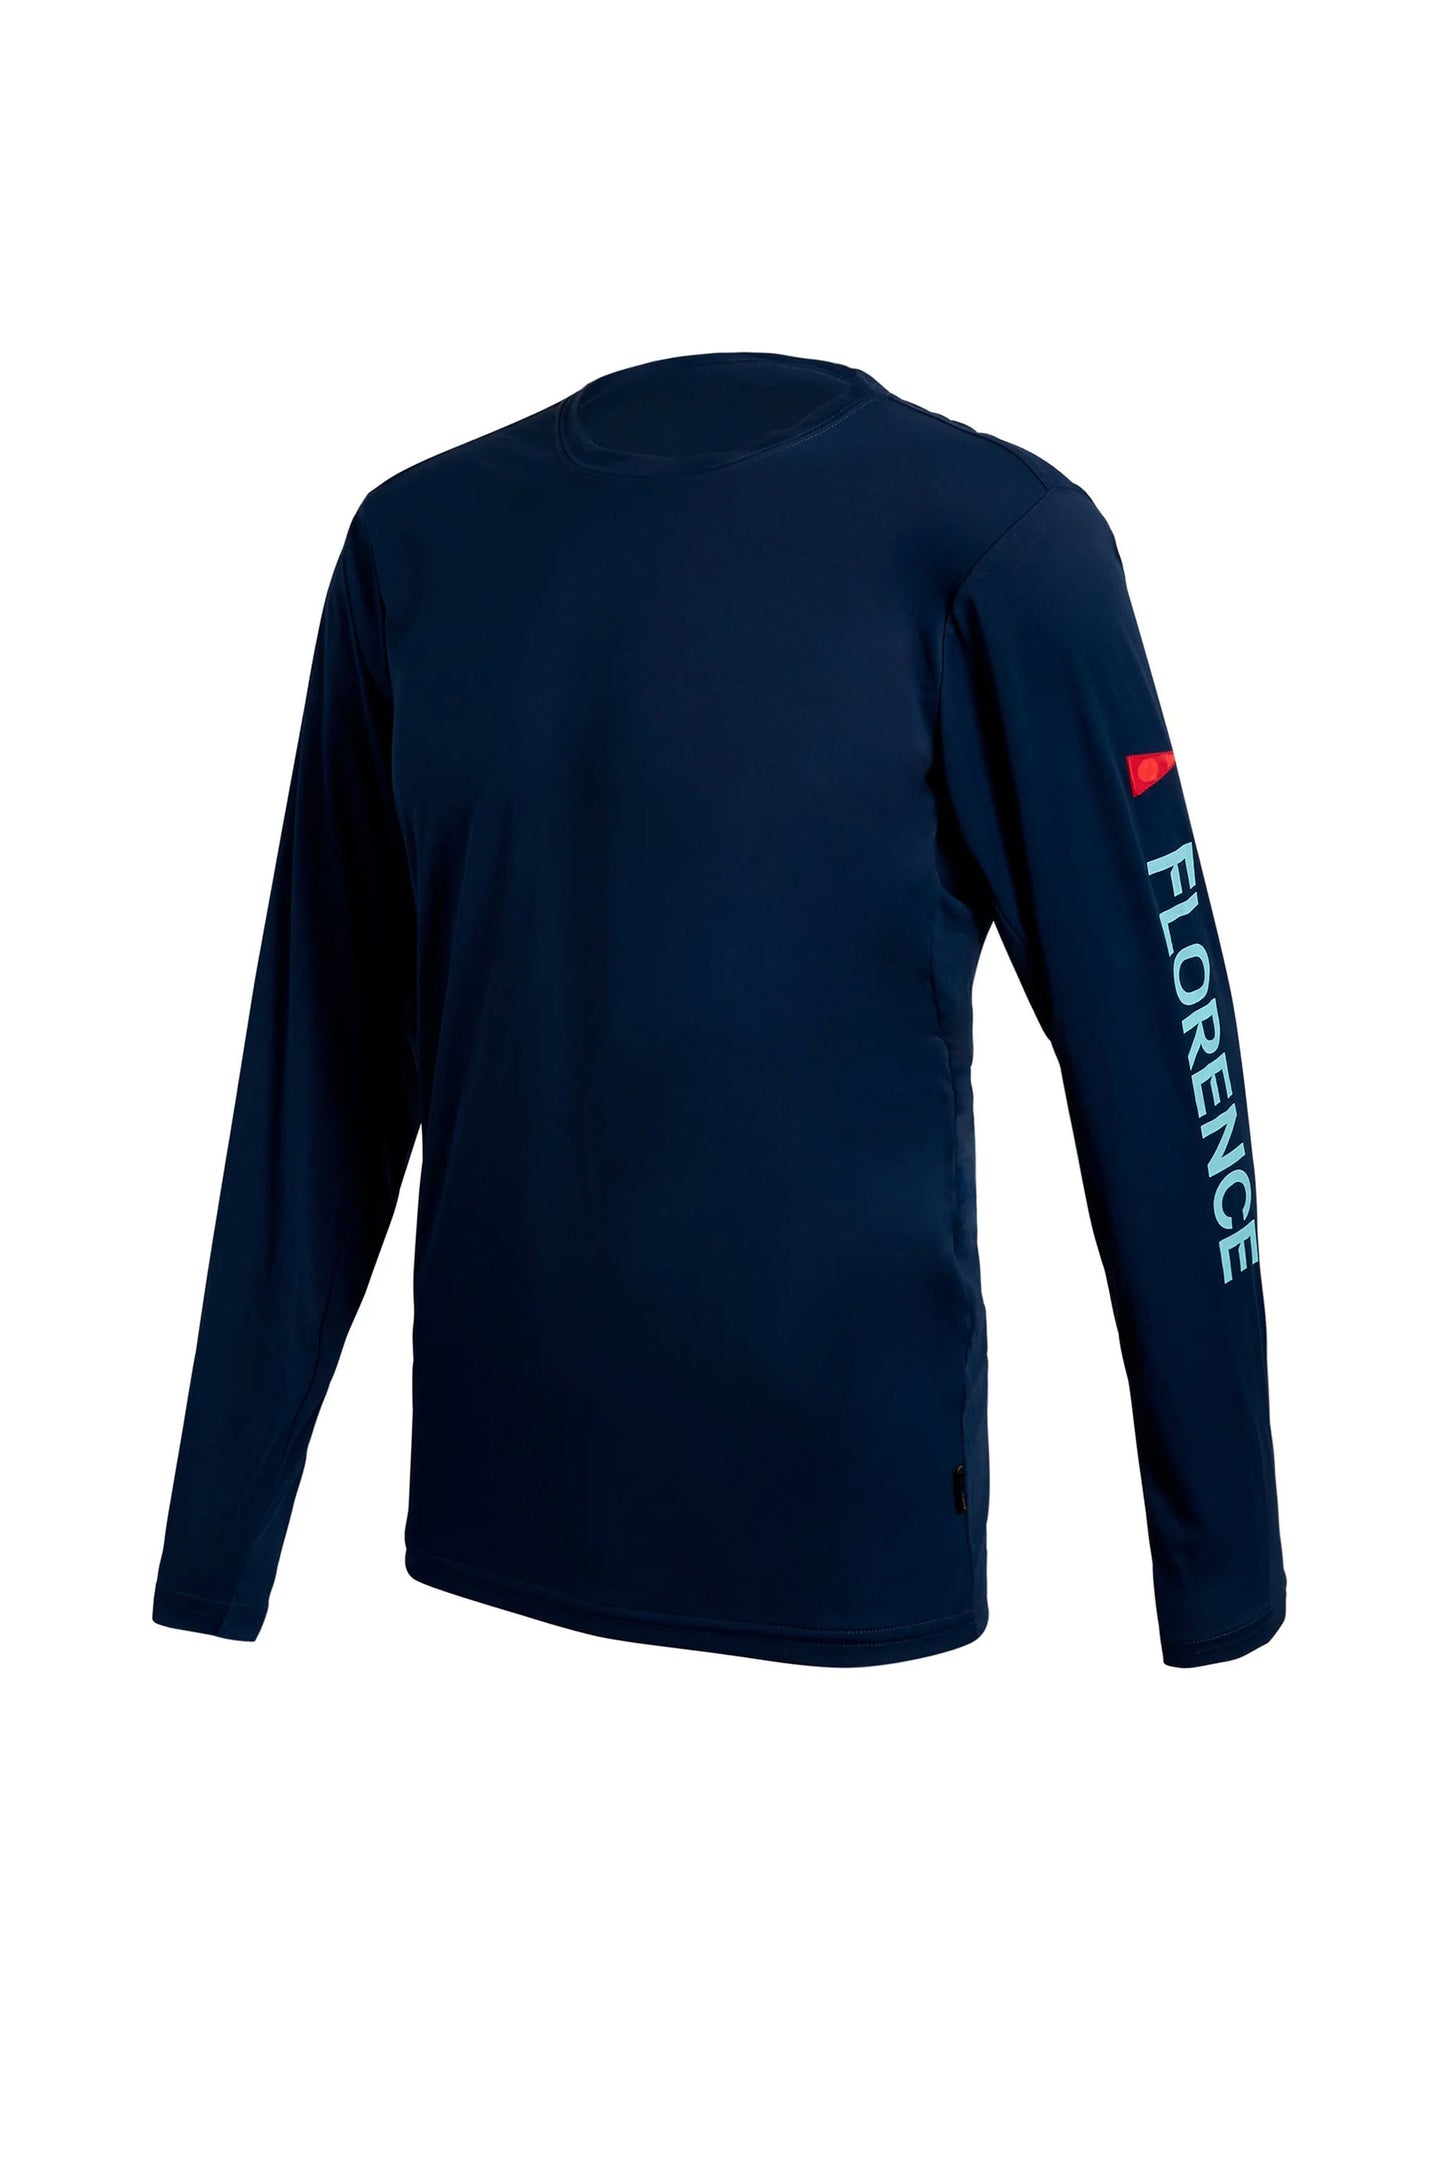 Pukas-Surf-Shop-florence-marine-sun-pro-logo-long-sleeve-upf-shirt